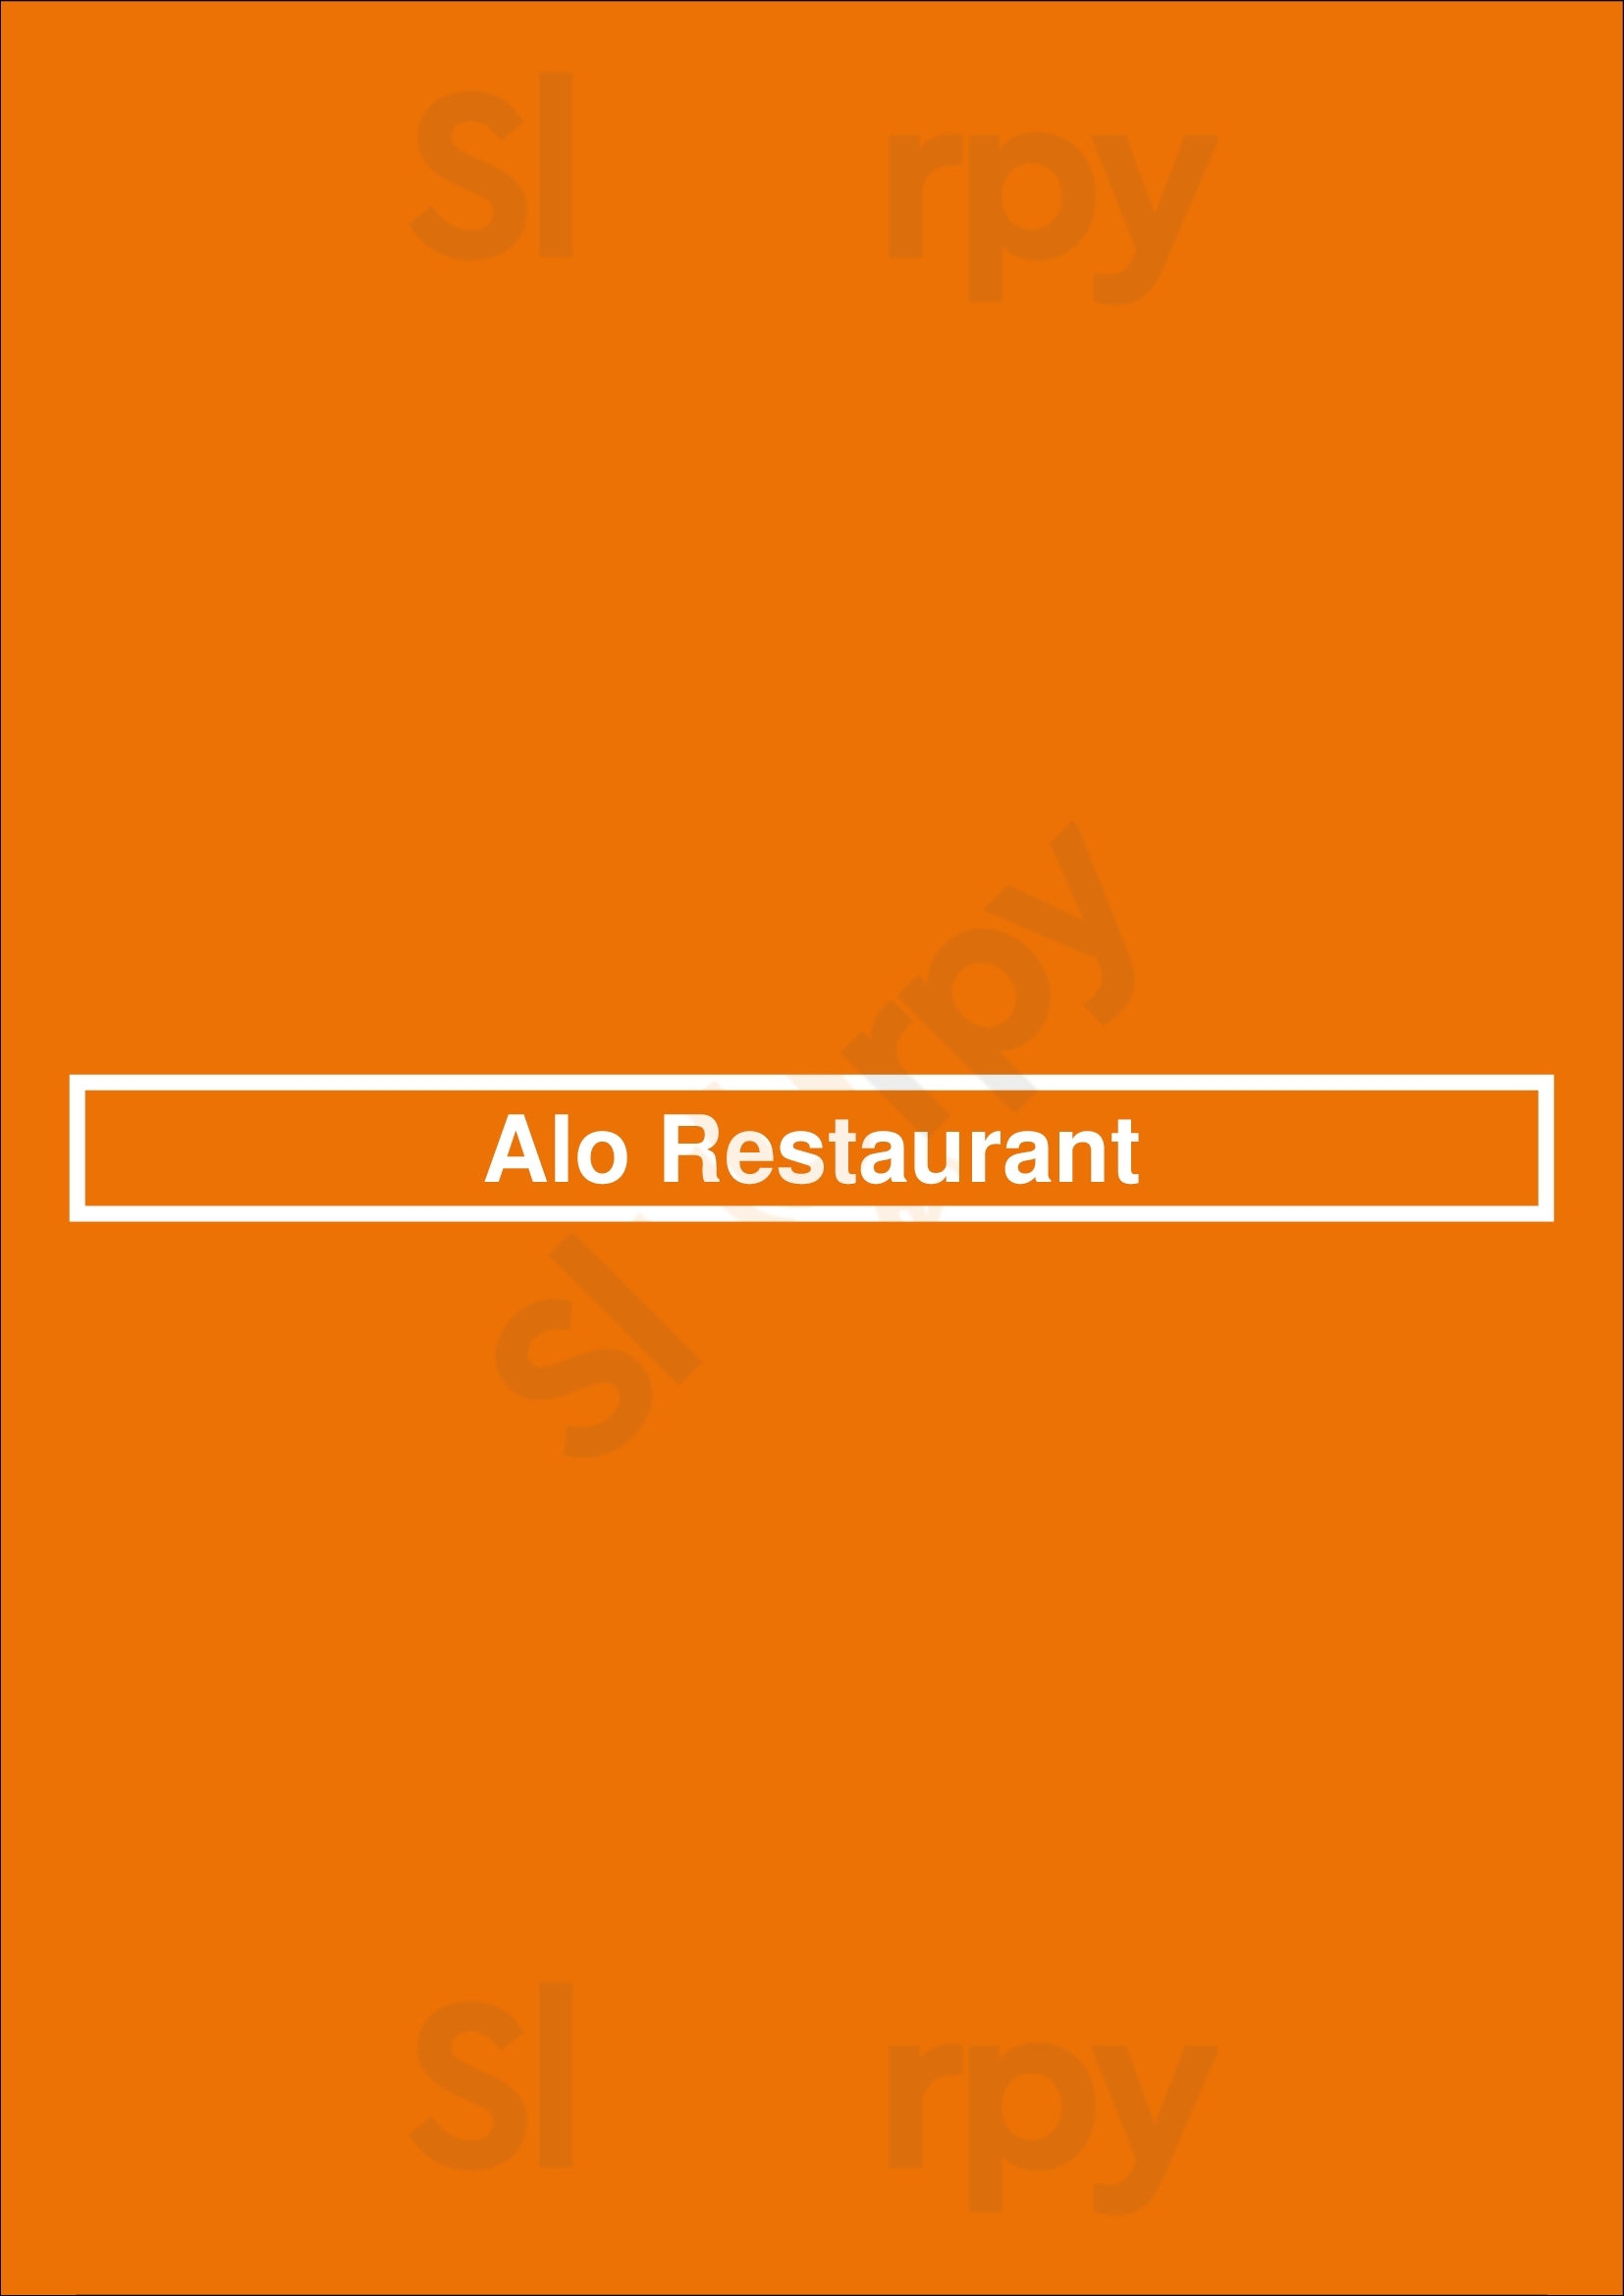 Alo Restaurant Elche Menu - 1